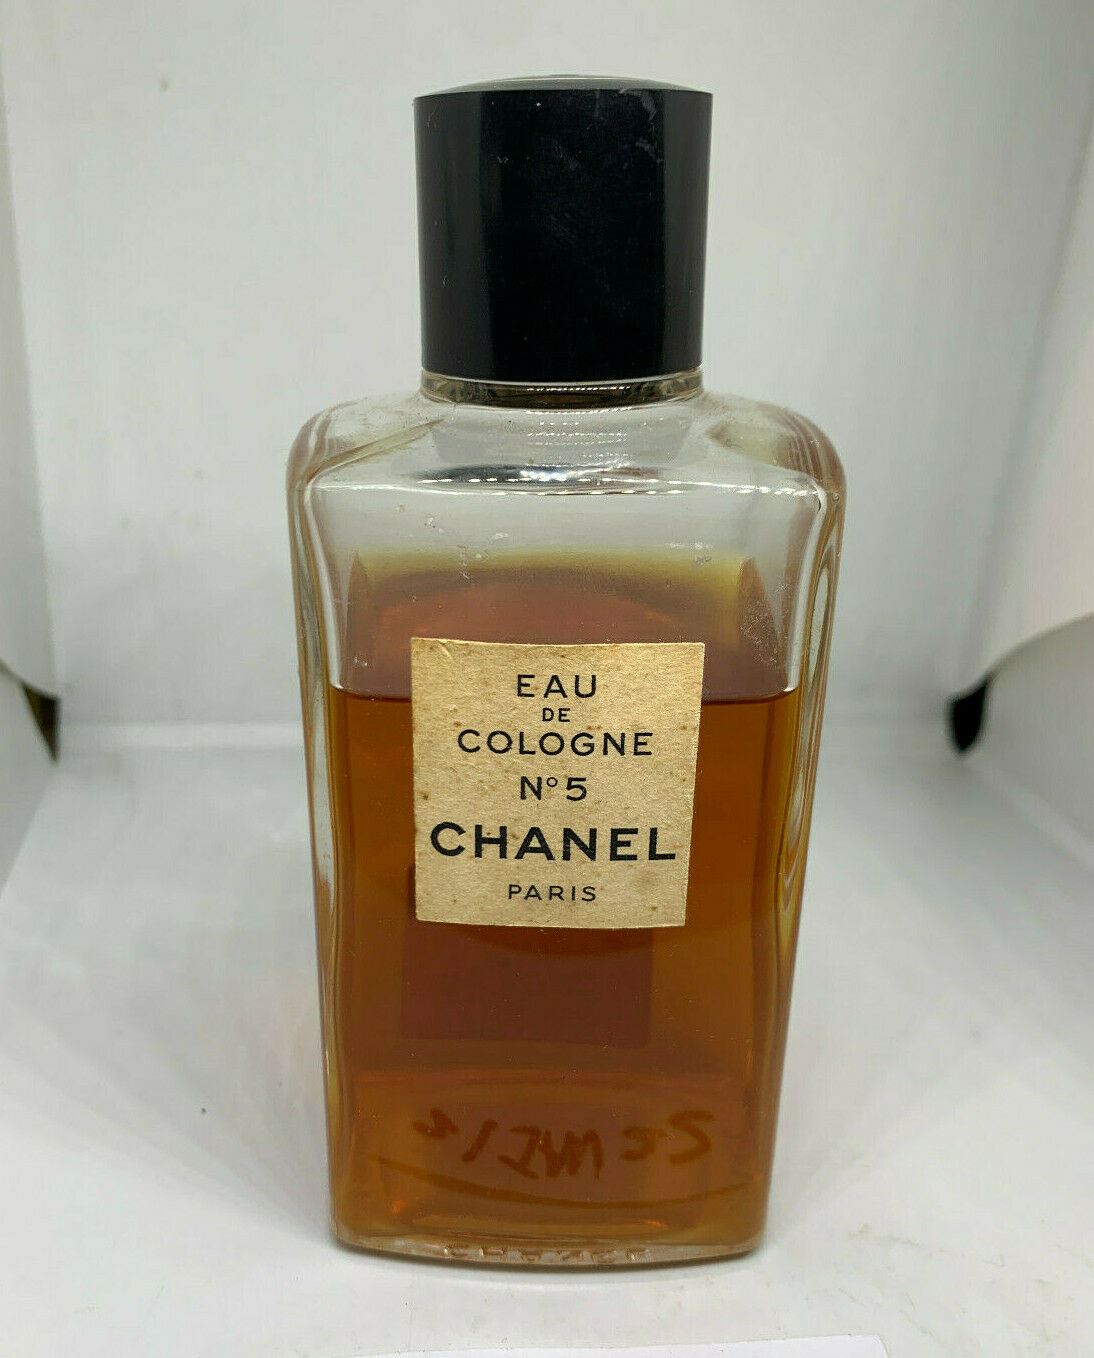  Chanel No.5 EDP Spray for Women, 6.8 Ounce : Beauty